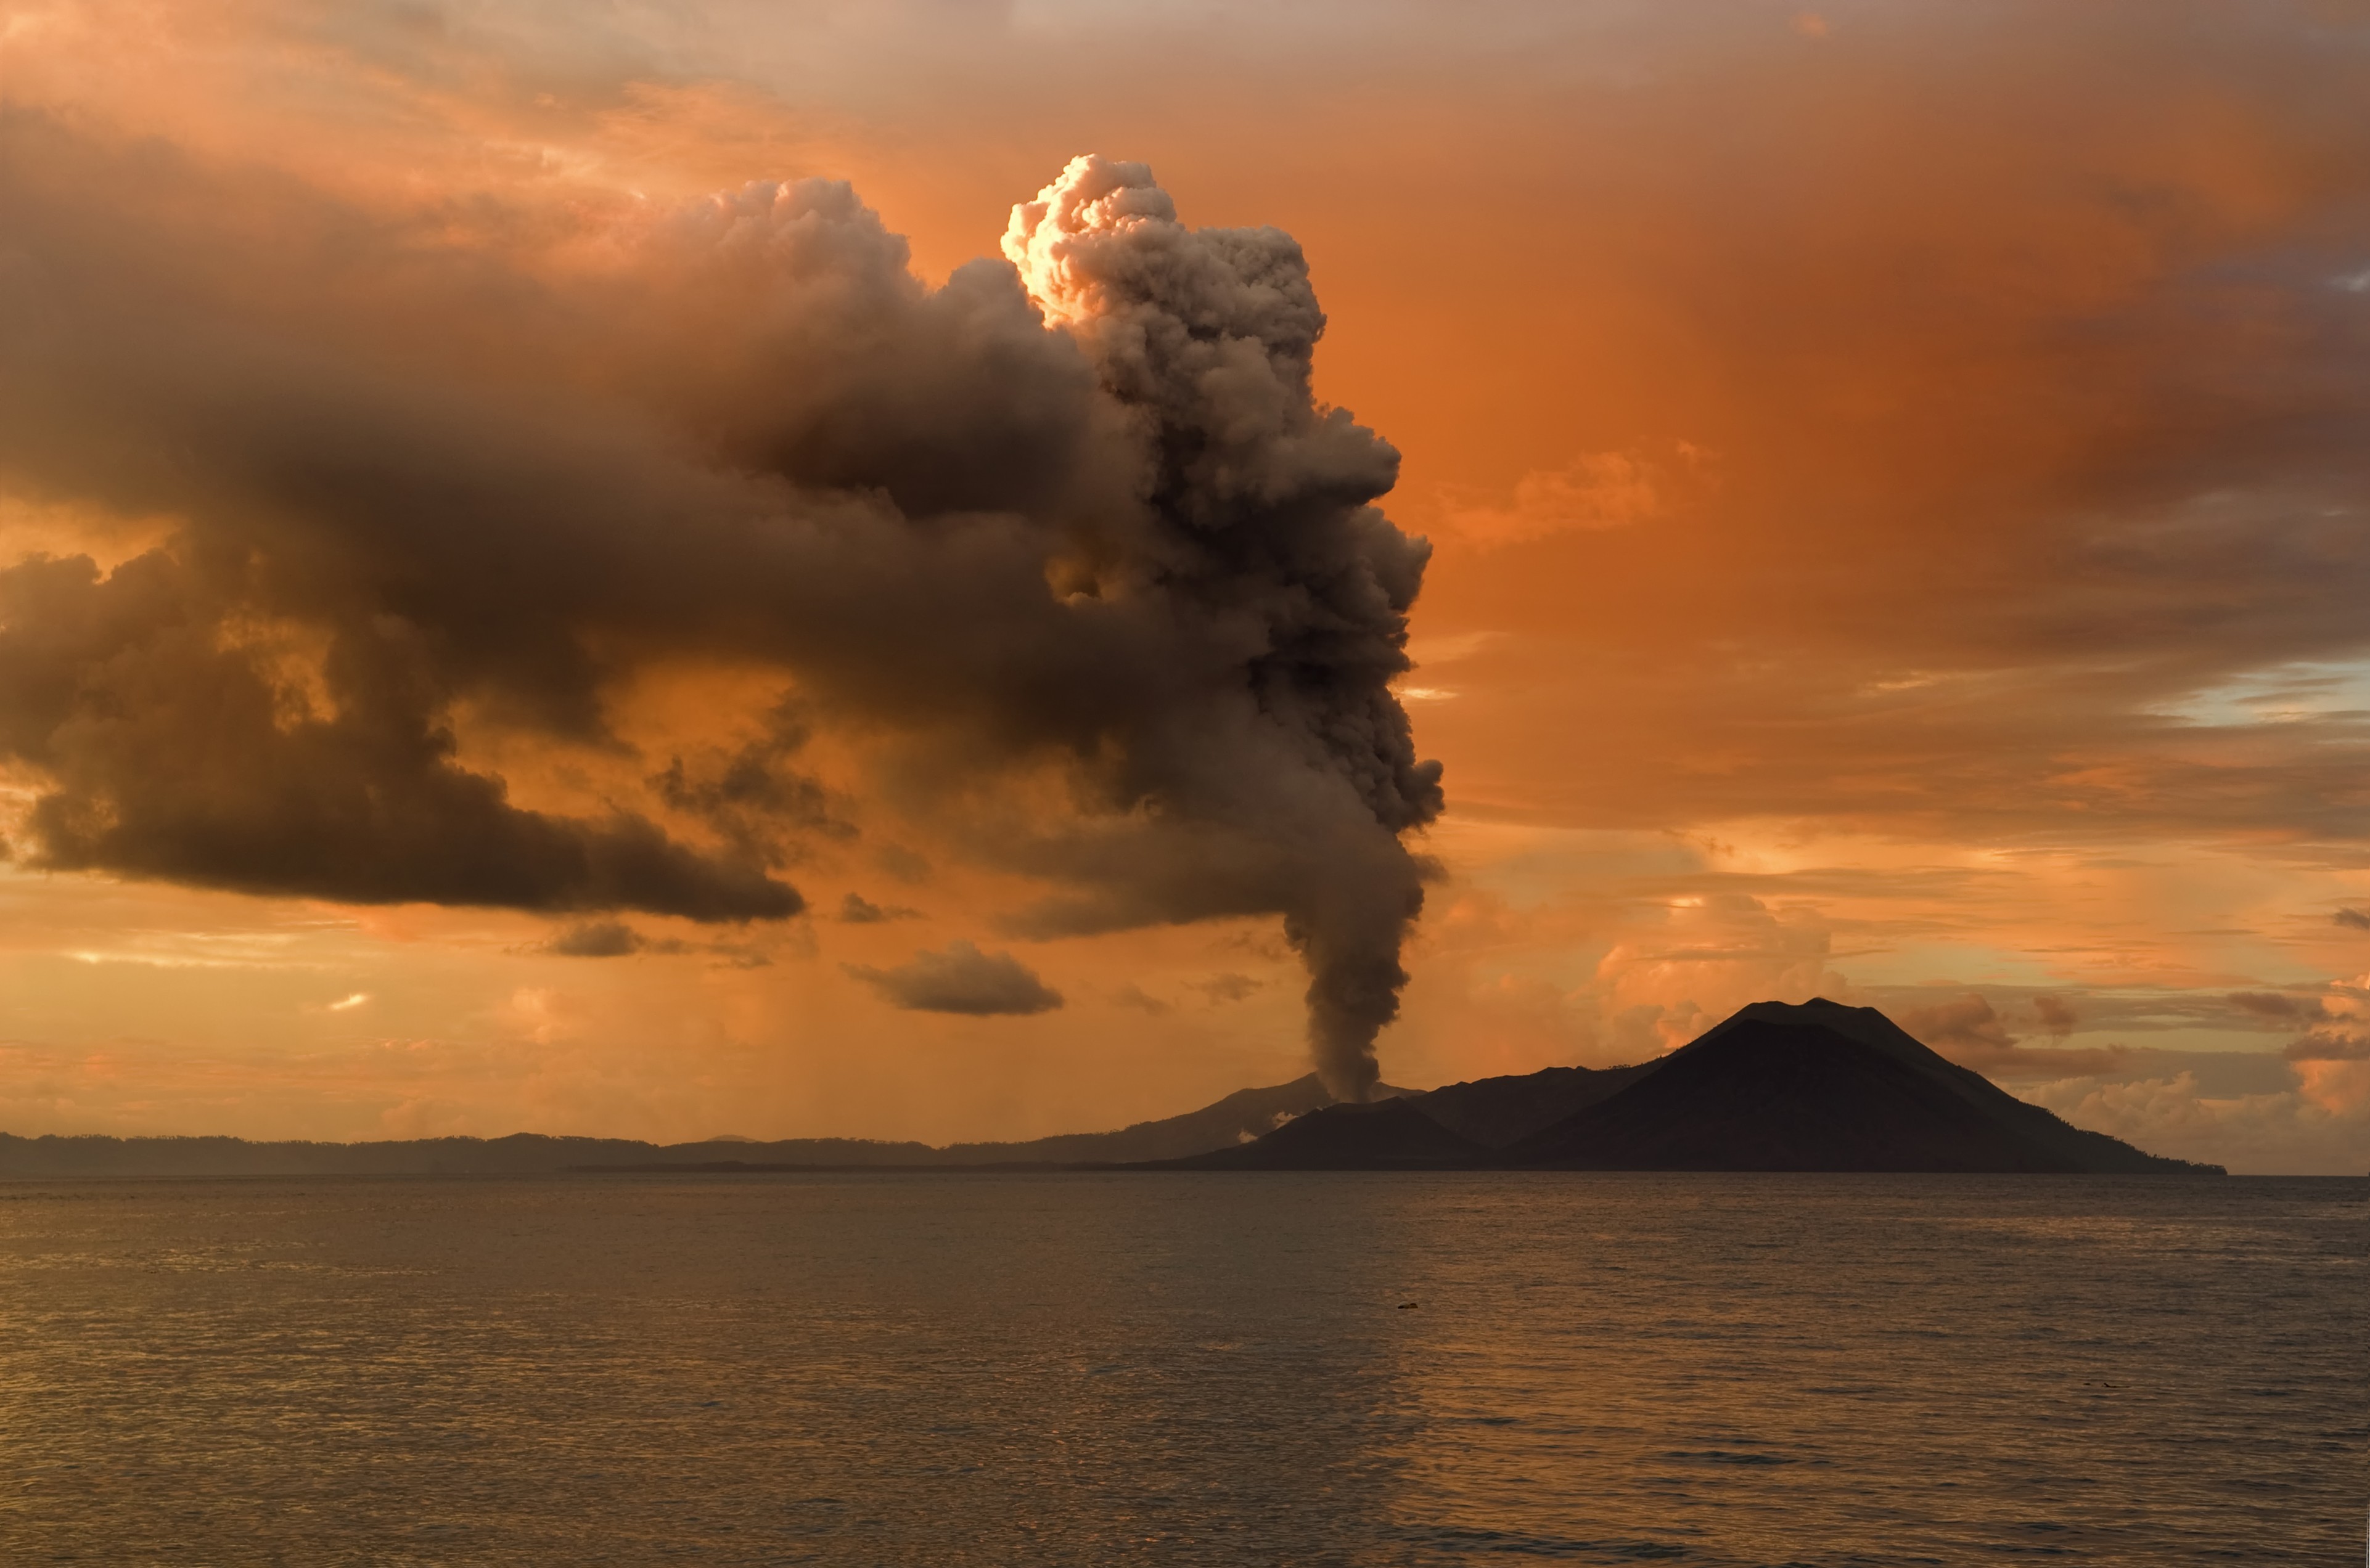 Misc: Sky Bueaty Clouds Smoke Orange Water Nature Volcano Image ...